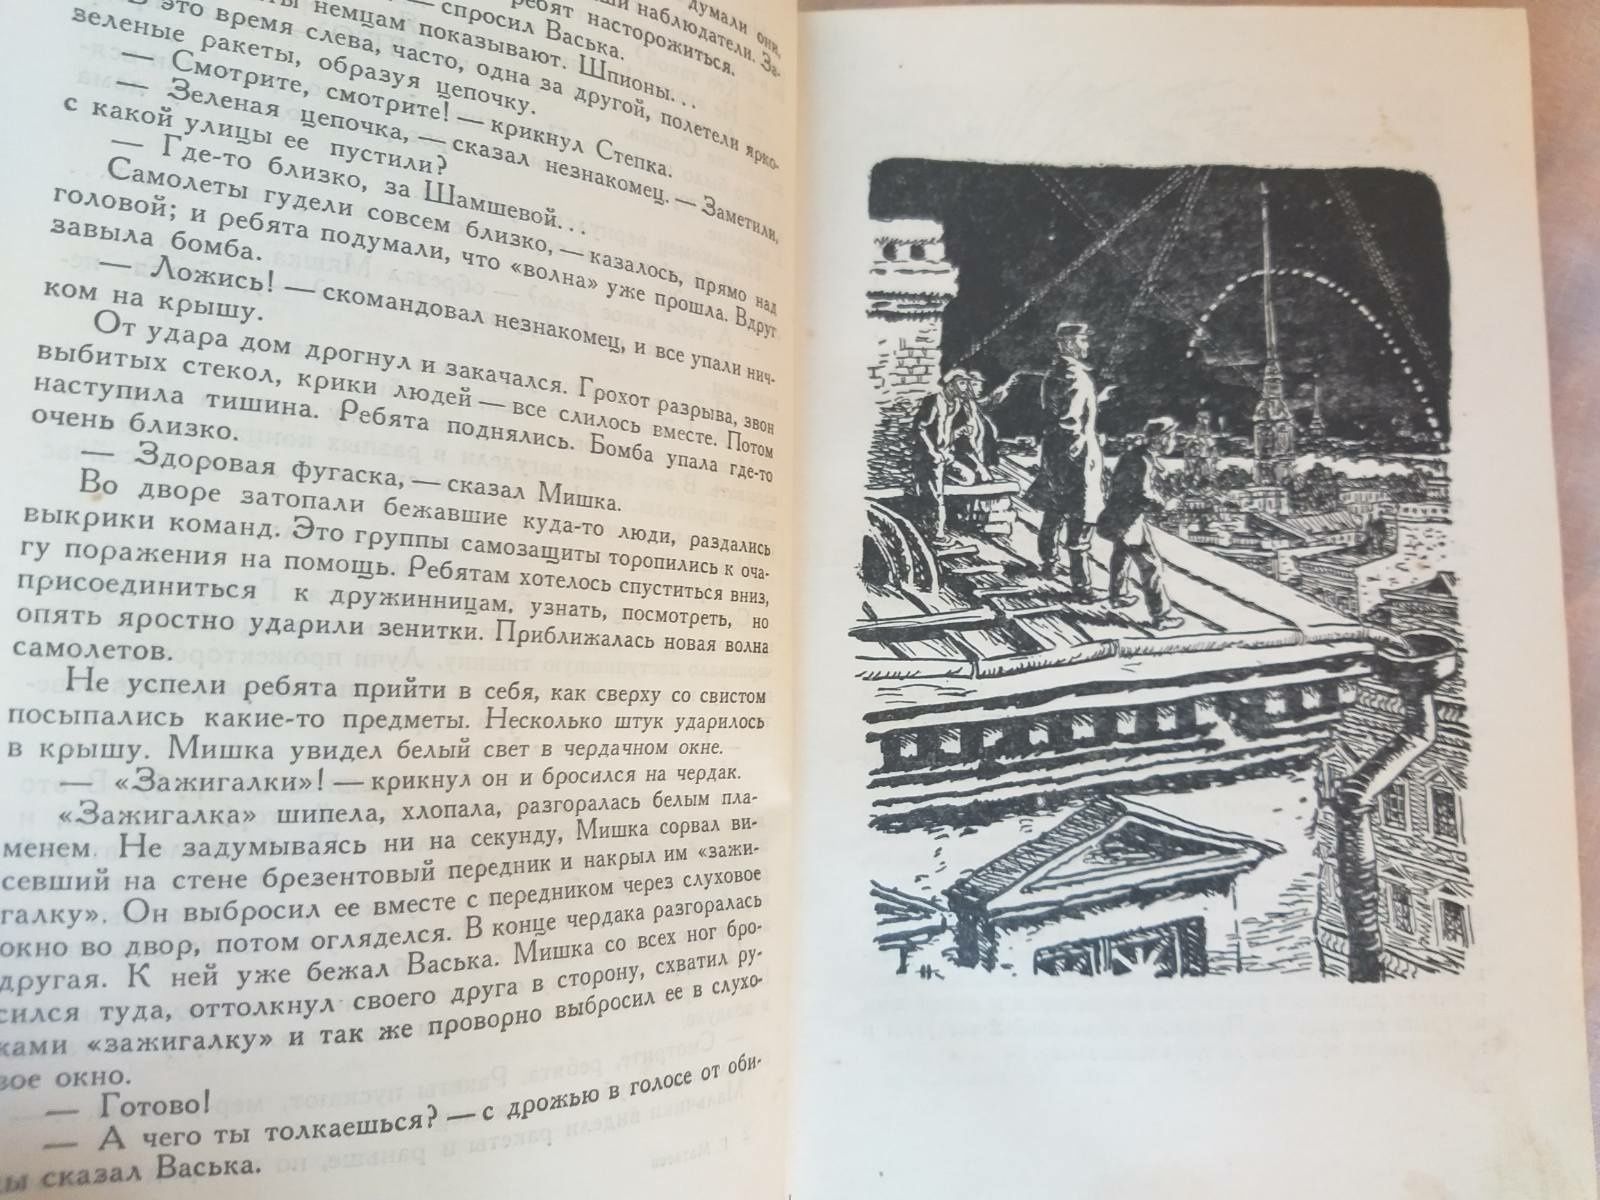 Тарантул Г Матвеев 1957 БПНФ библиотека приключений фантастика